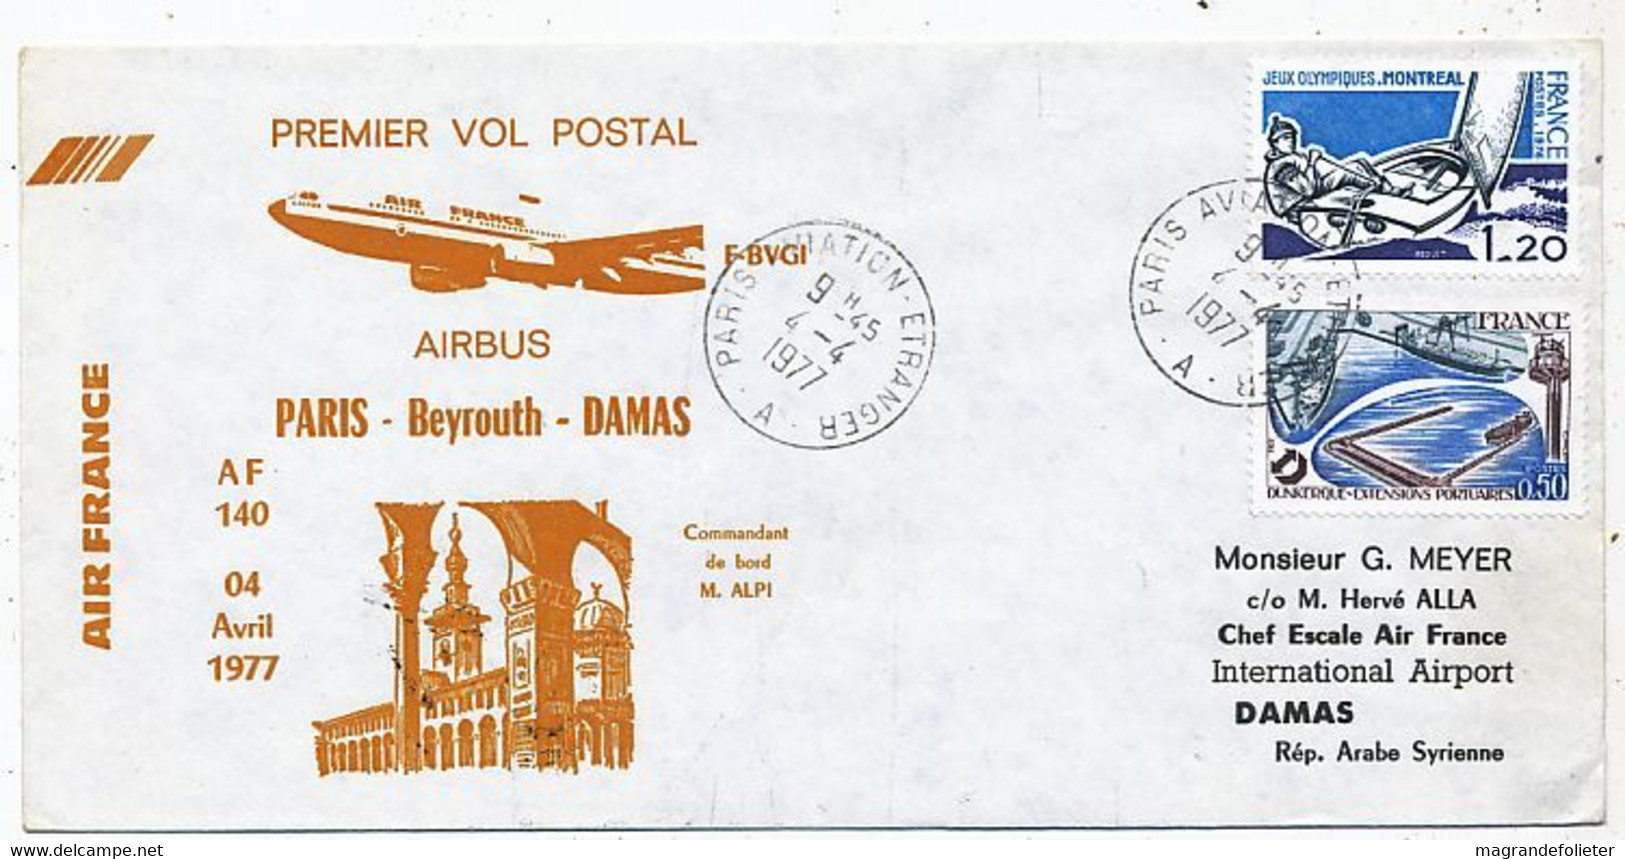 AVION AVIATION AIRLINE AIR FRANCE PREMIERE VOL POSTAL AIRBUS PARIS-BEYROUTH-DAMAS 1977 - Flight Certificates